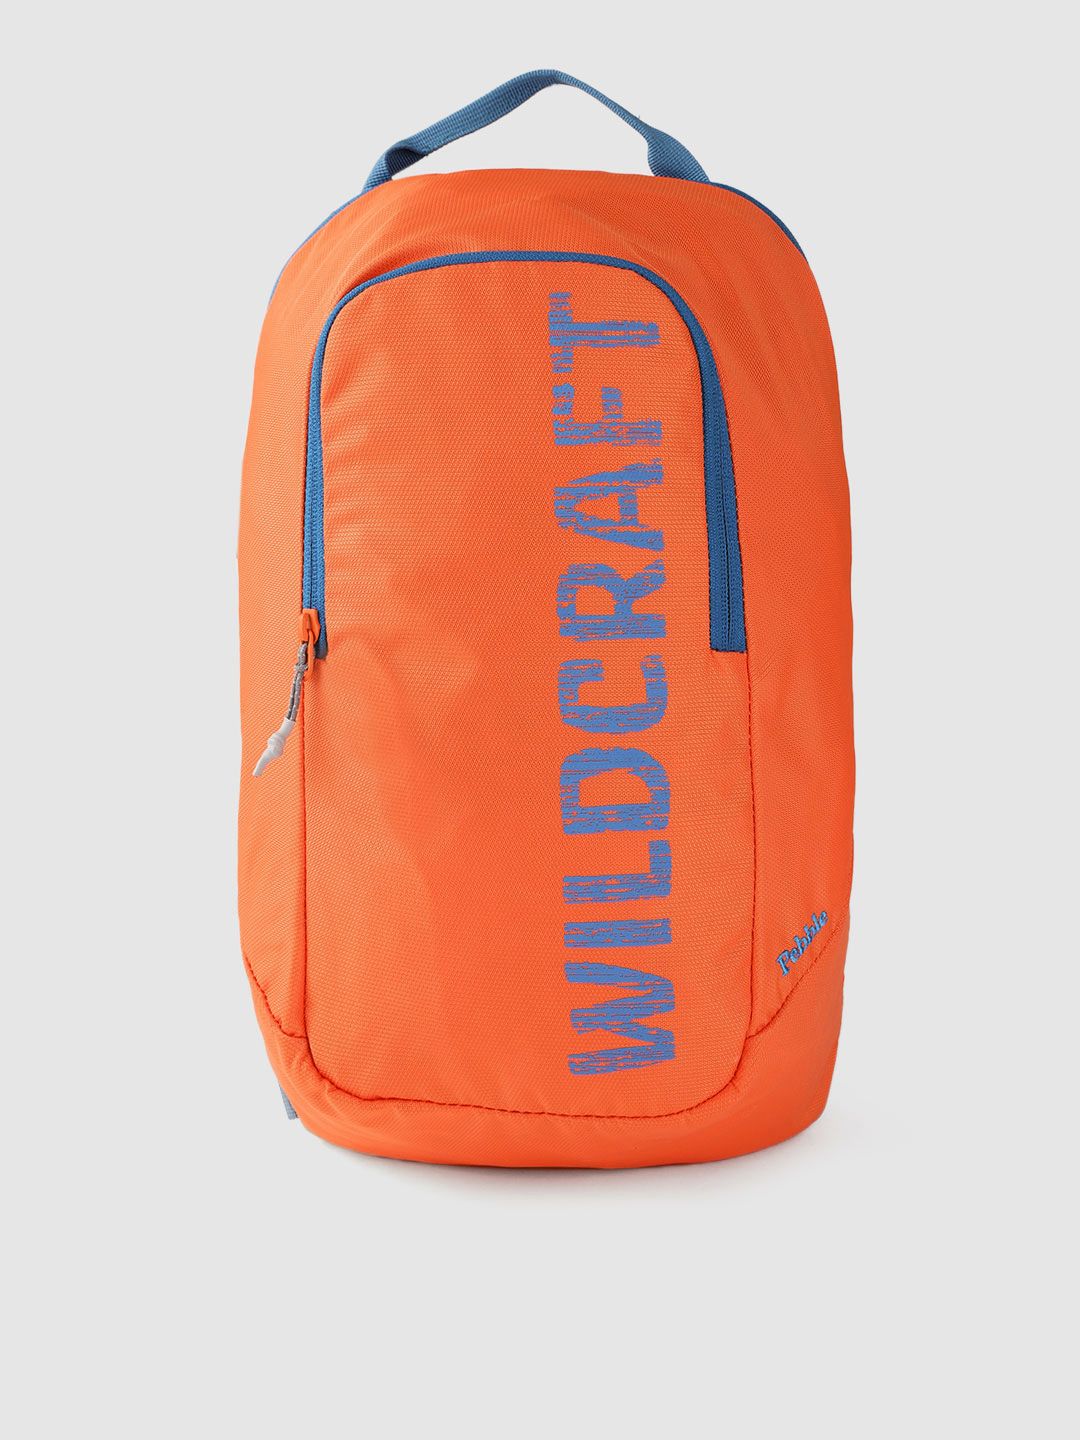 Wildcraft Unisex Orange Solid Backpack Price in India